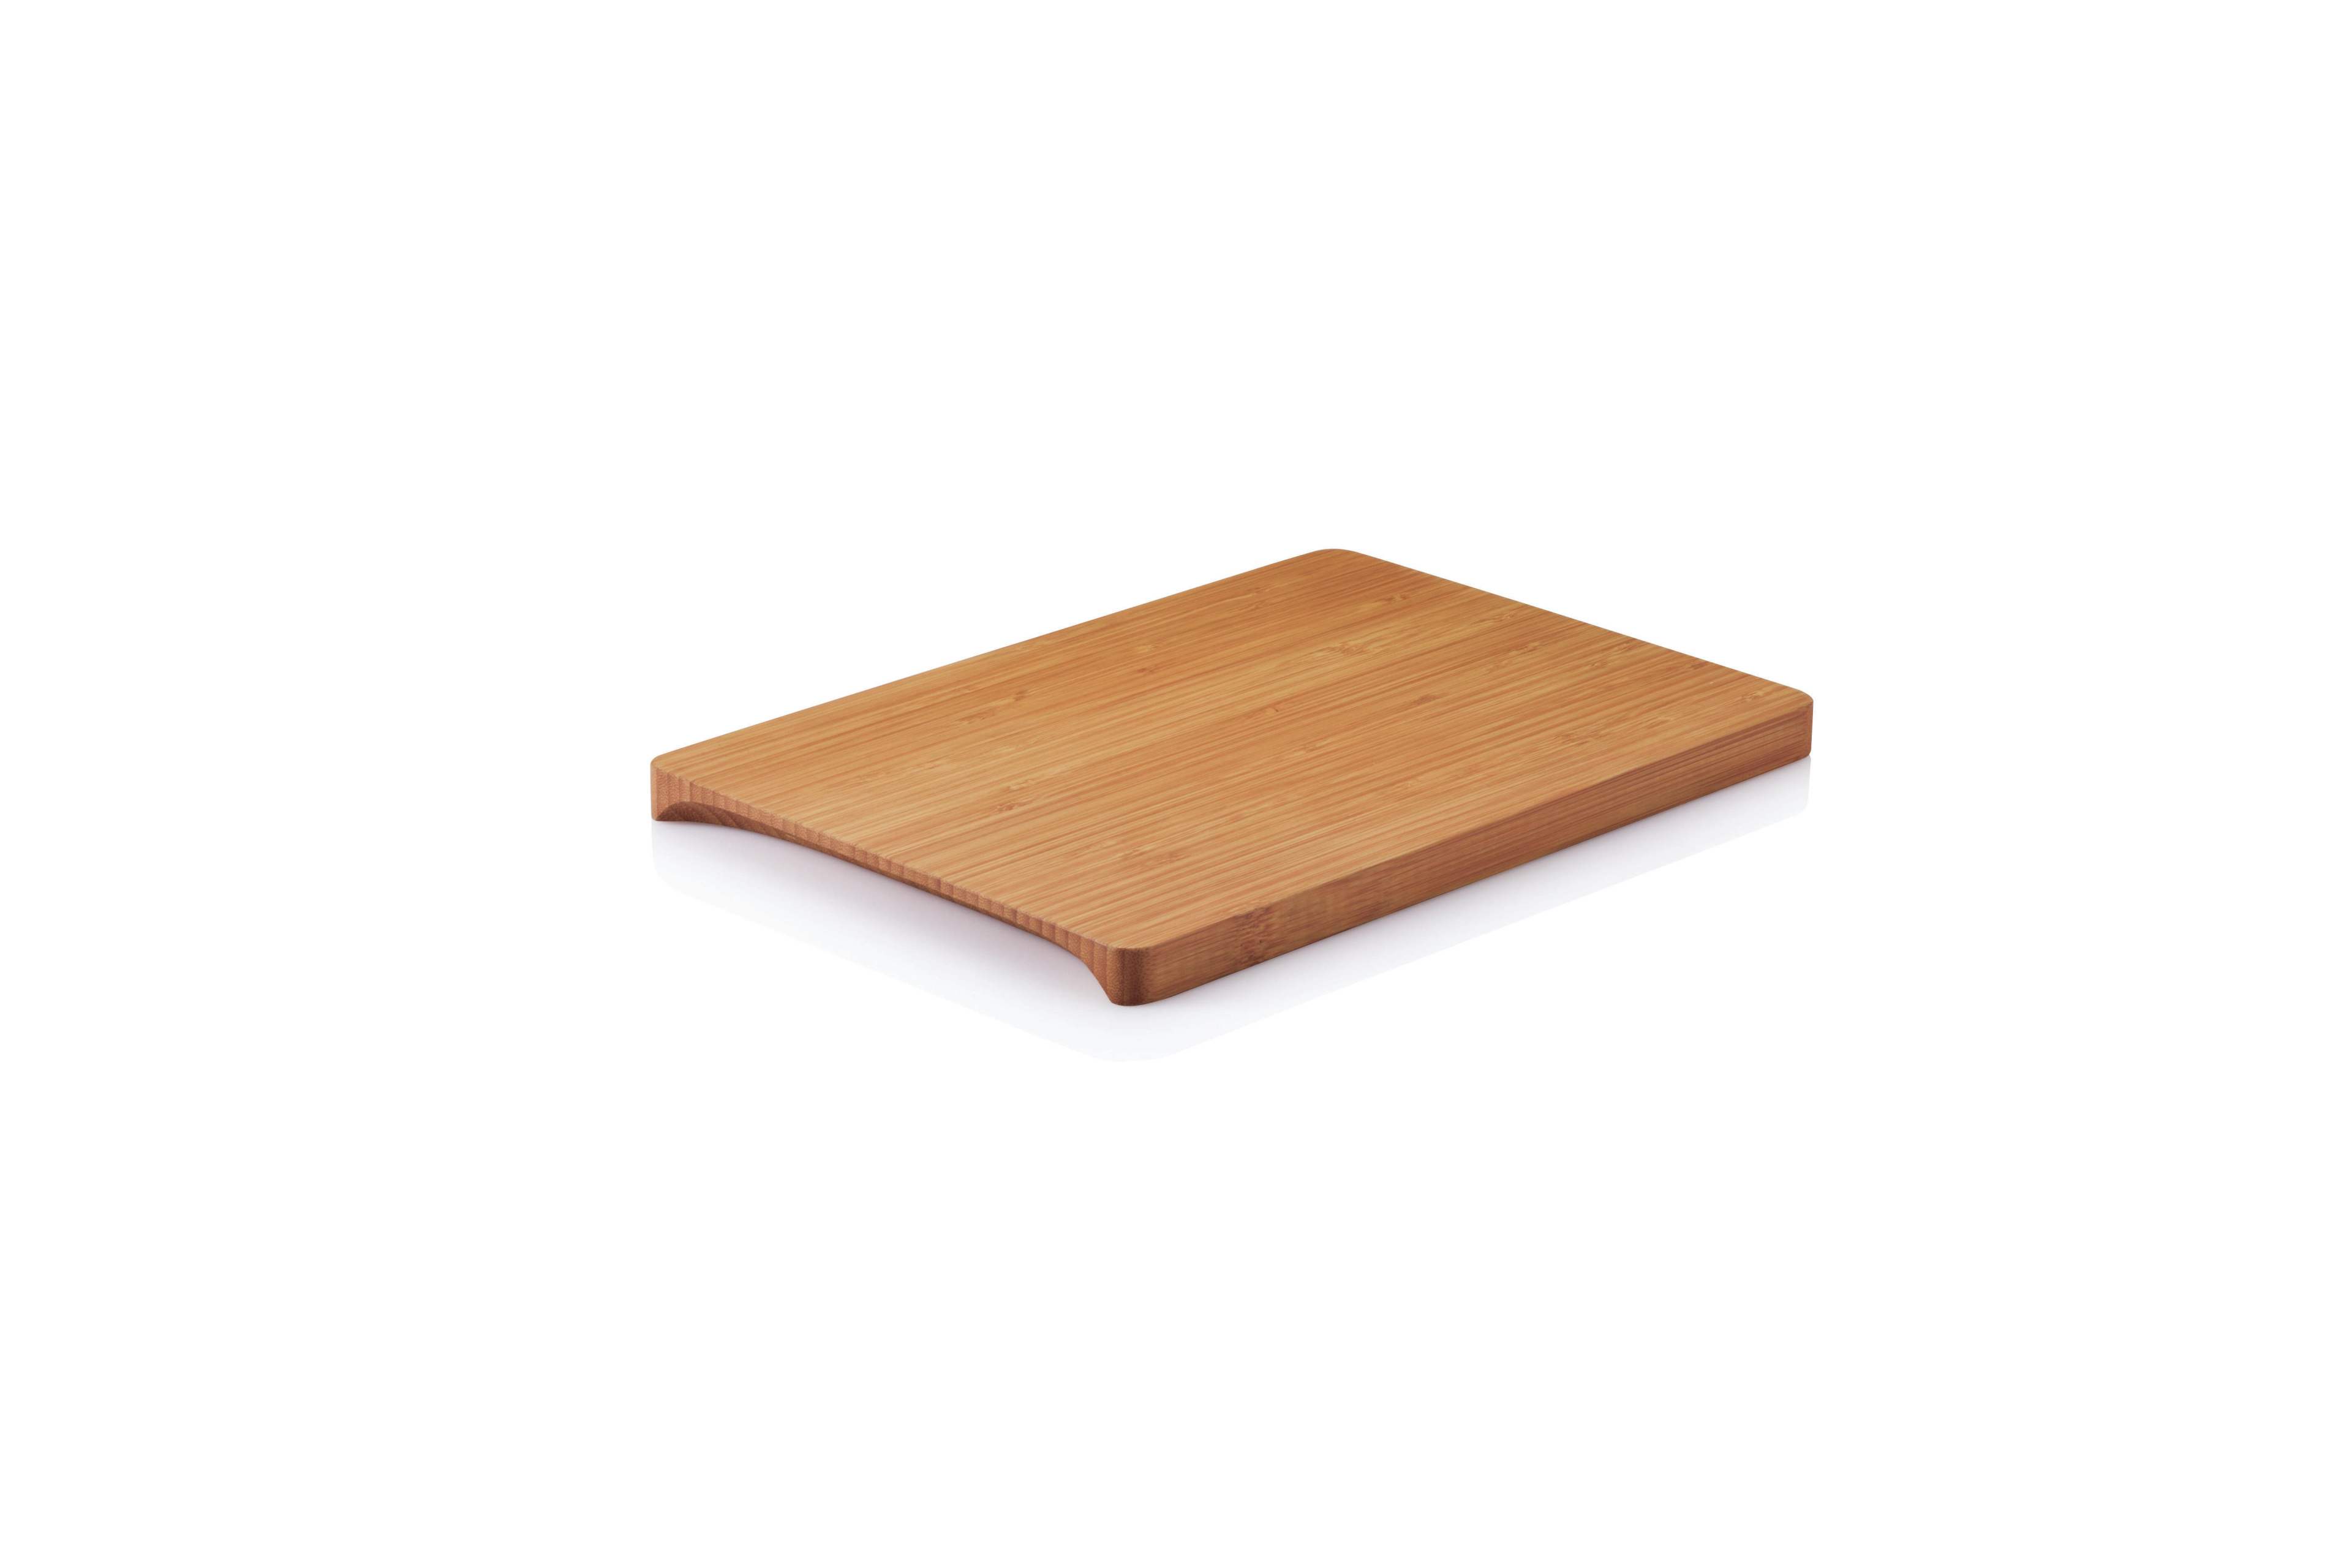 Bambu Undercut Cutting & Serving Board. Medium. 10 x 7